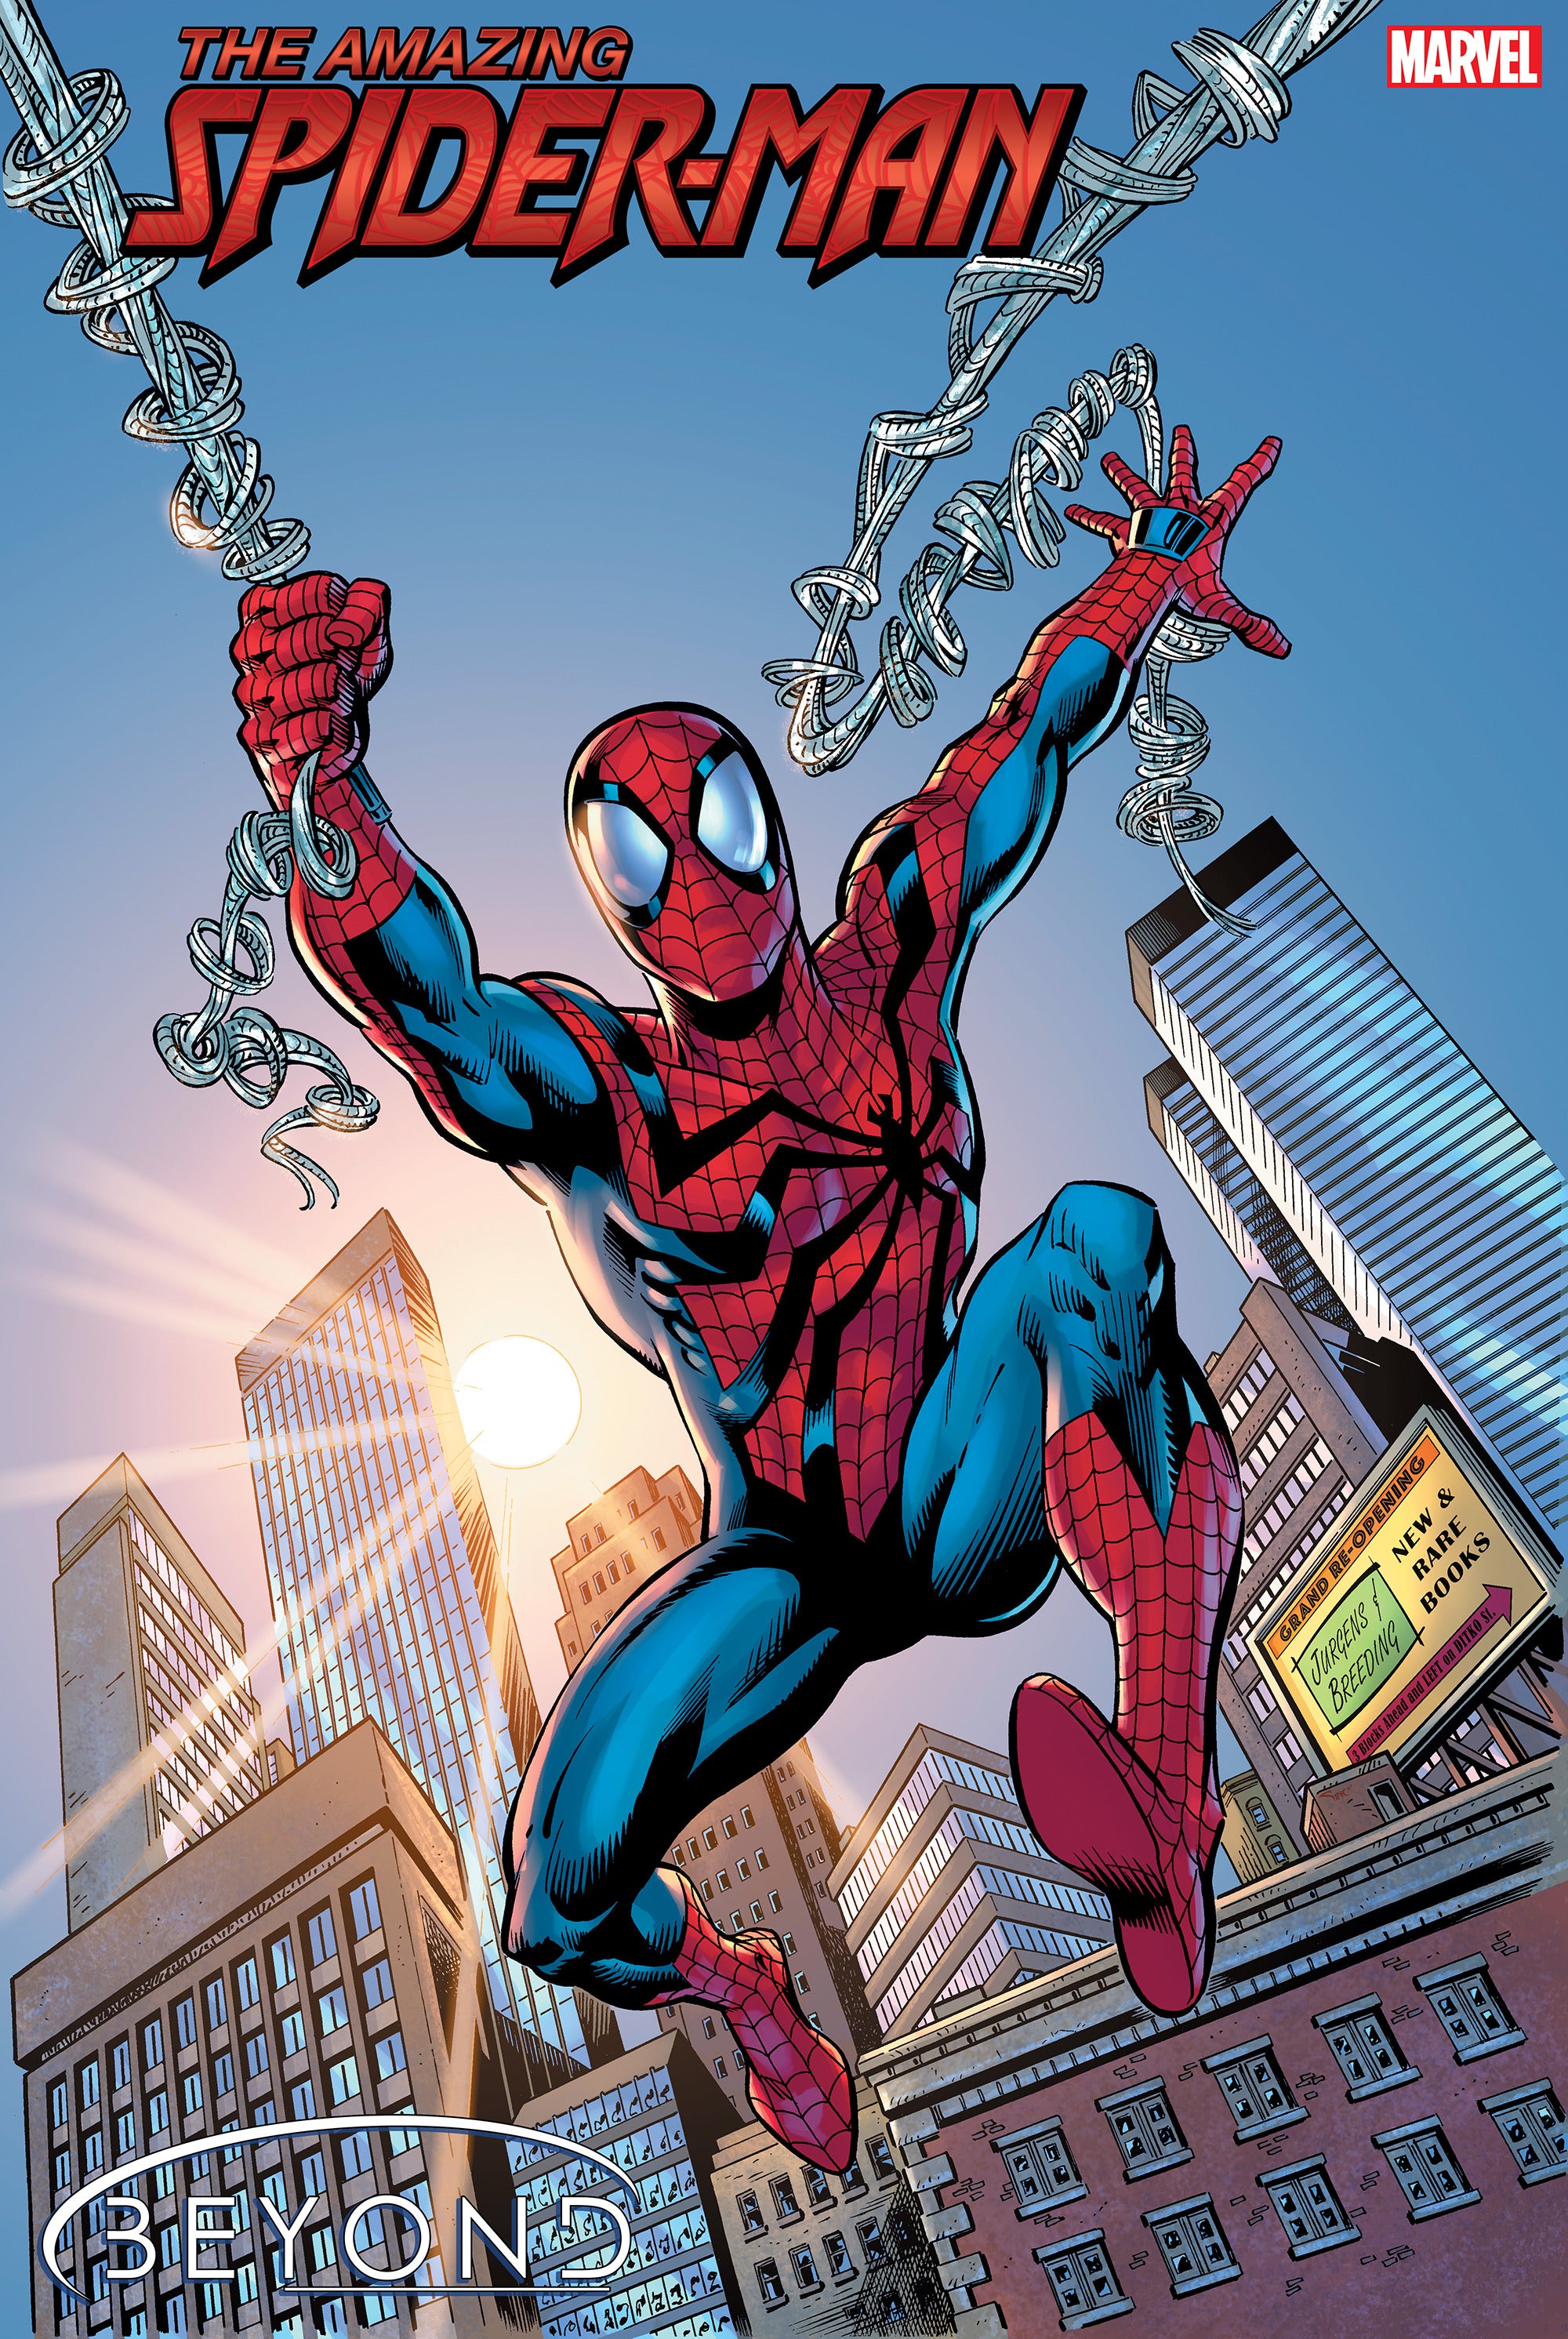 Web-Swinging Thrills Await: Embrace the Marvel Spider-Man Remastered  Adventure in NYC! : steamunlocked: : Audible Books & Originals